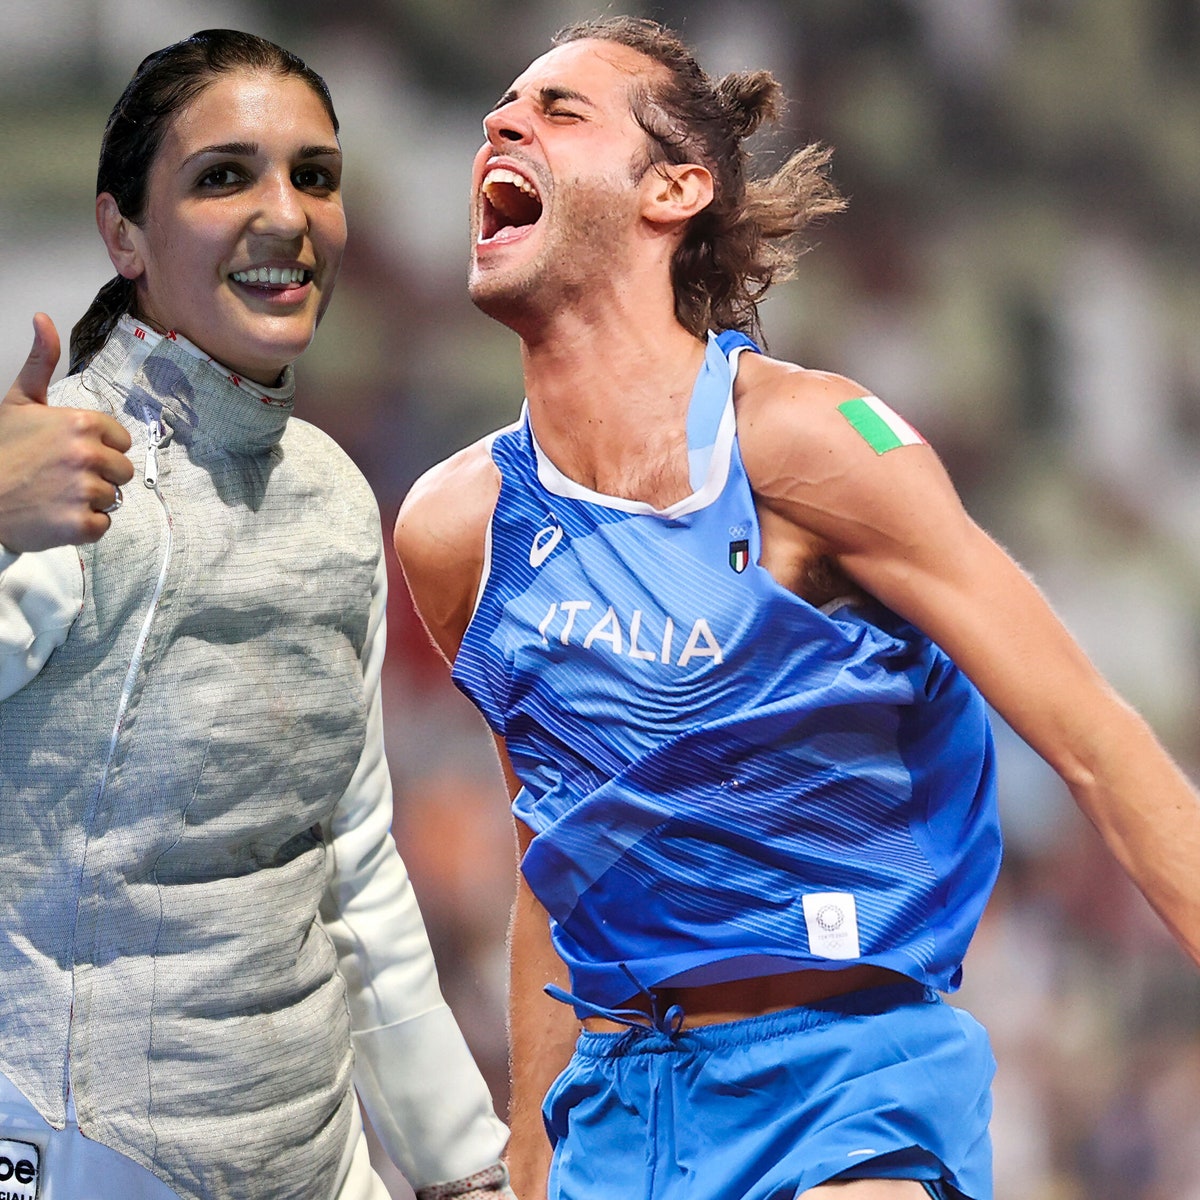 Portabandiera Italia alle Olimpiadi di Parigi 2024: Gianmarco Tamberi e Arianna Errigo pronti a sfilare